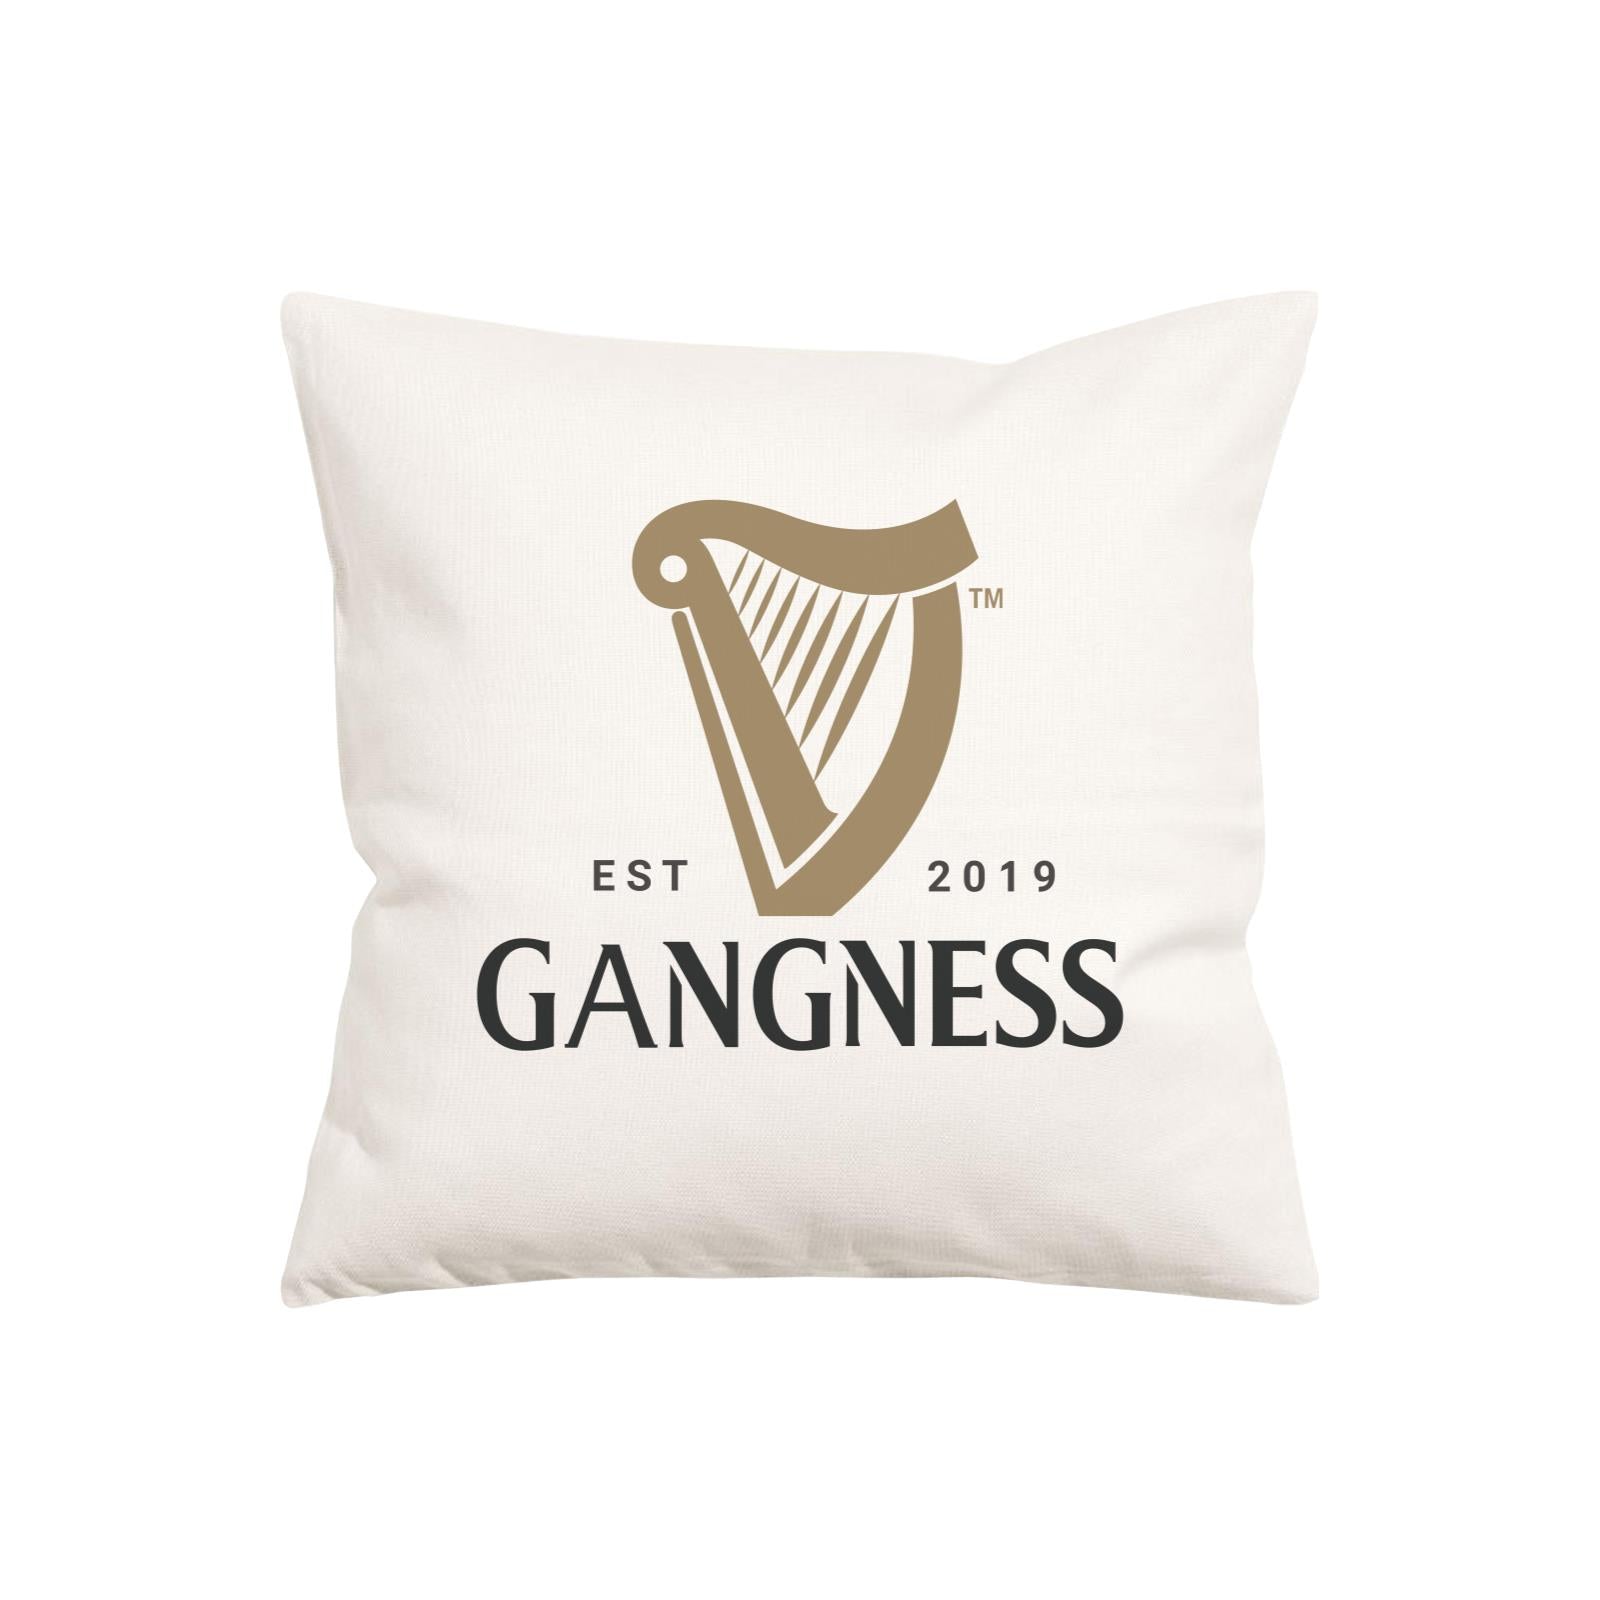 Slang Statement Gangness Pillow Cushion